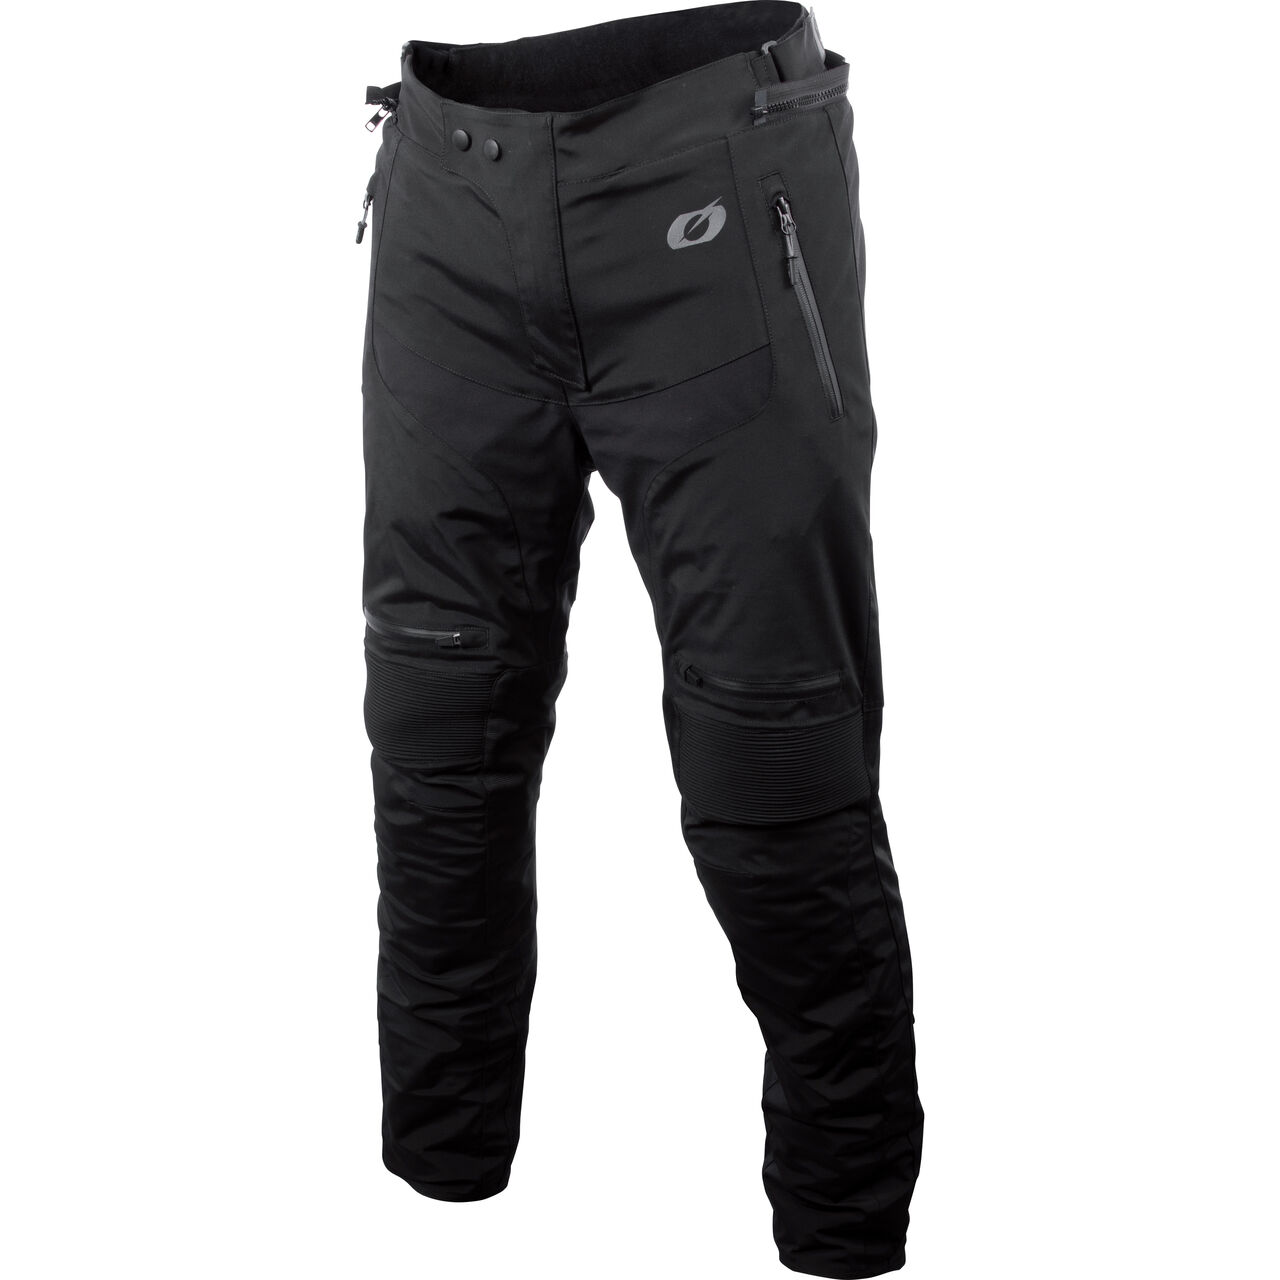 Sierra textile pants black 106 (54 tall)